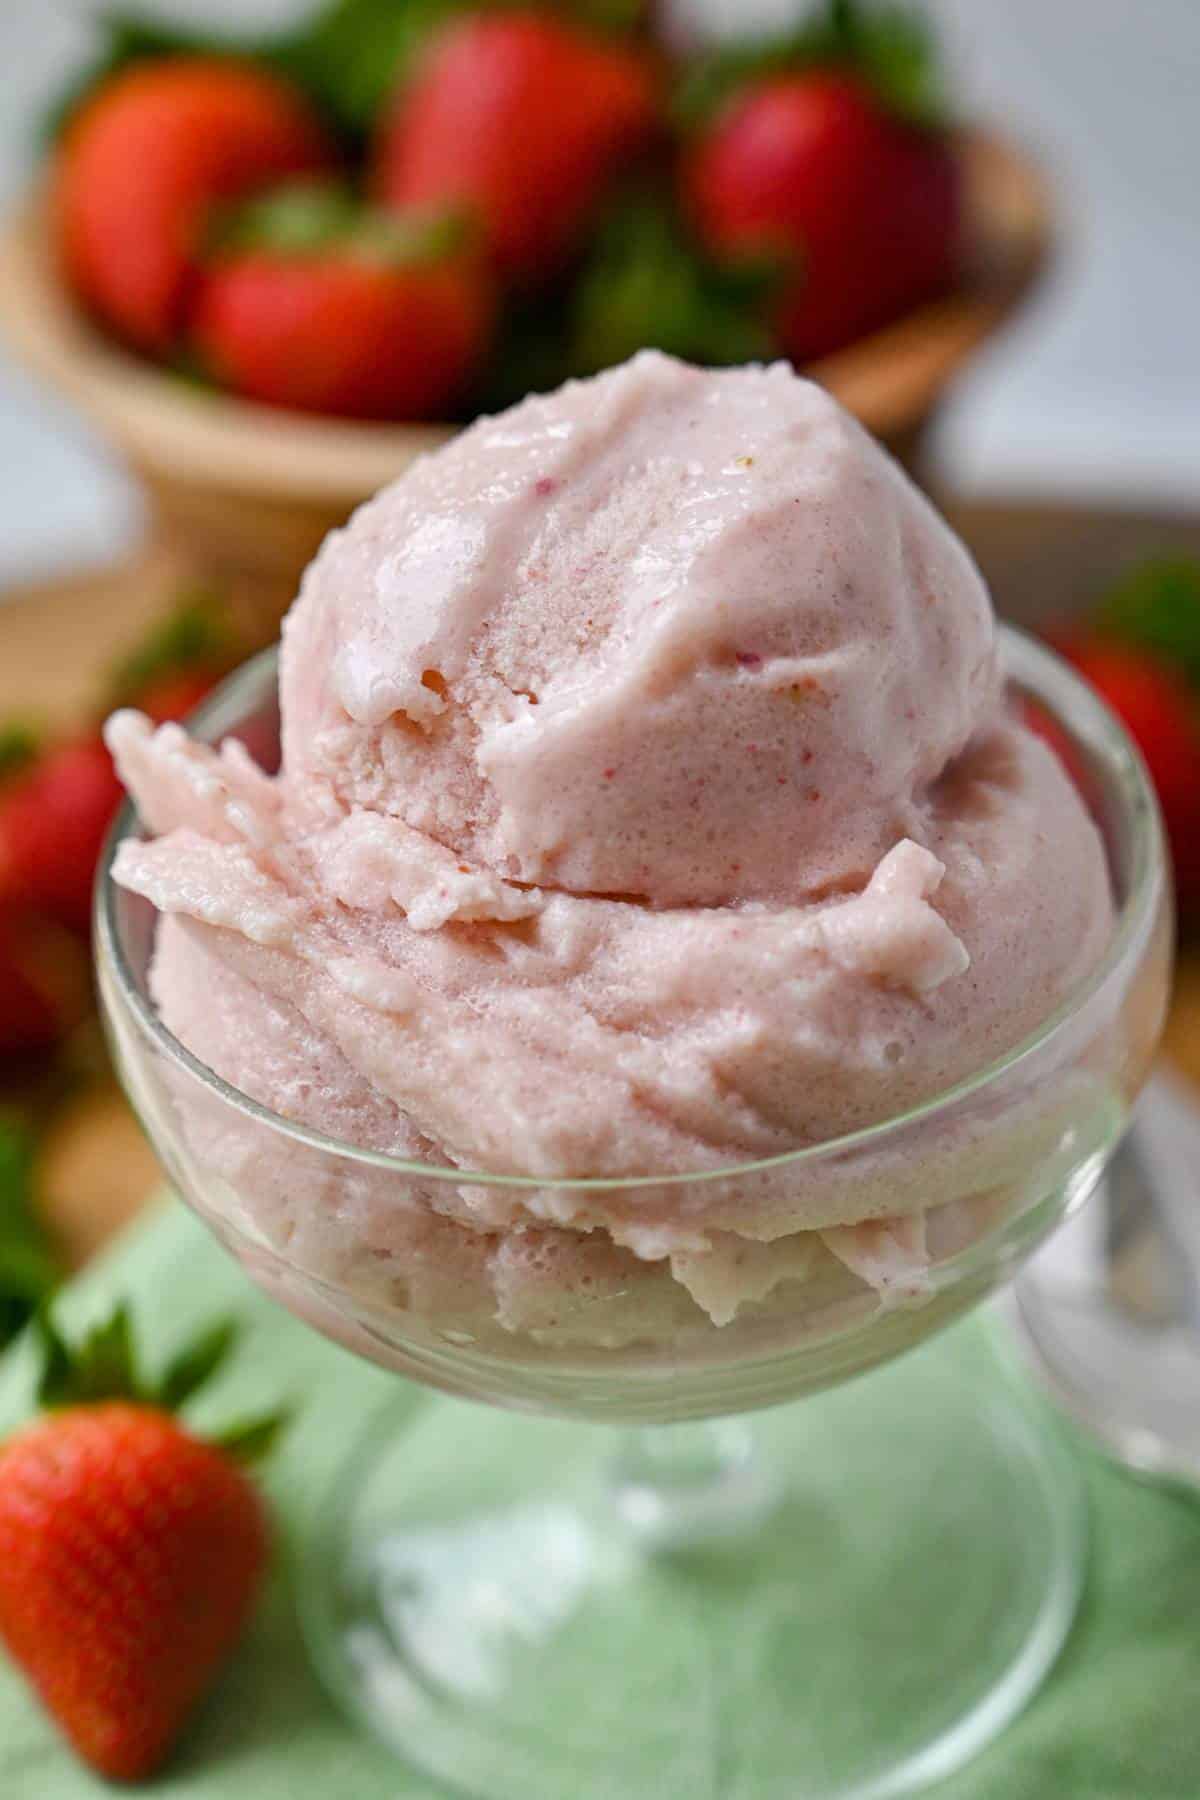 a dish of strawberry ice cream with strawberries around it